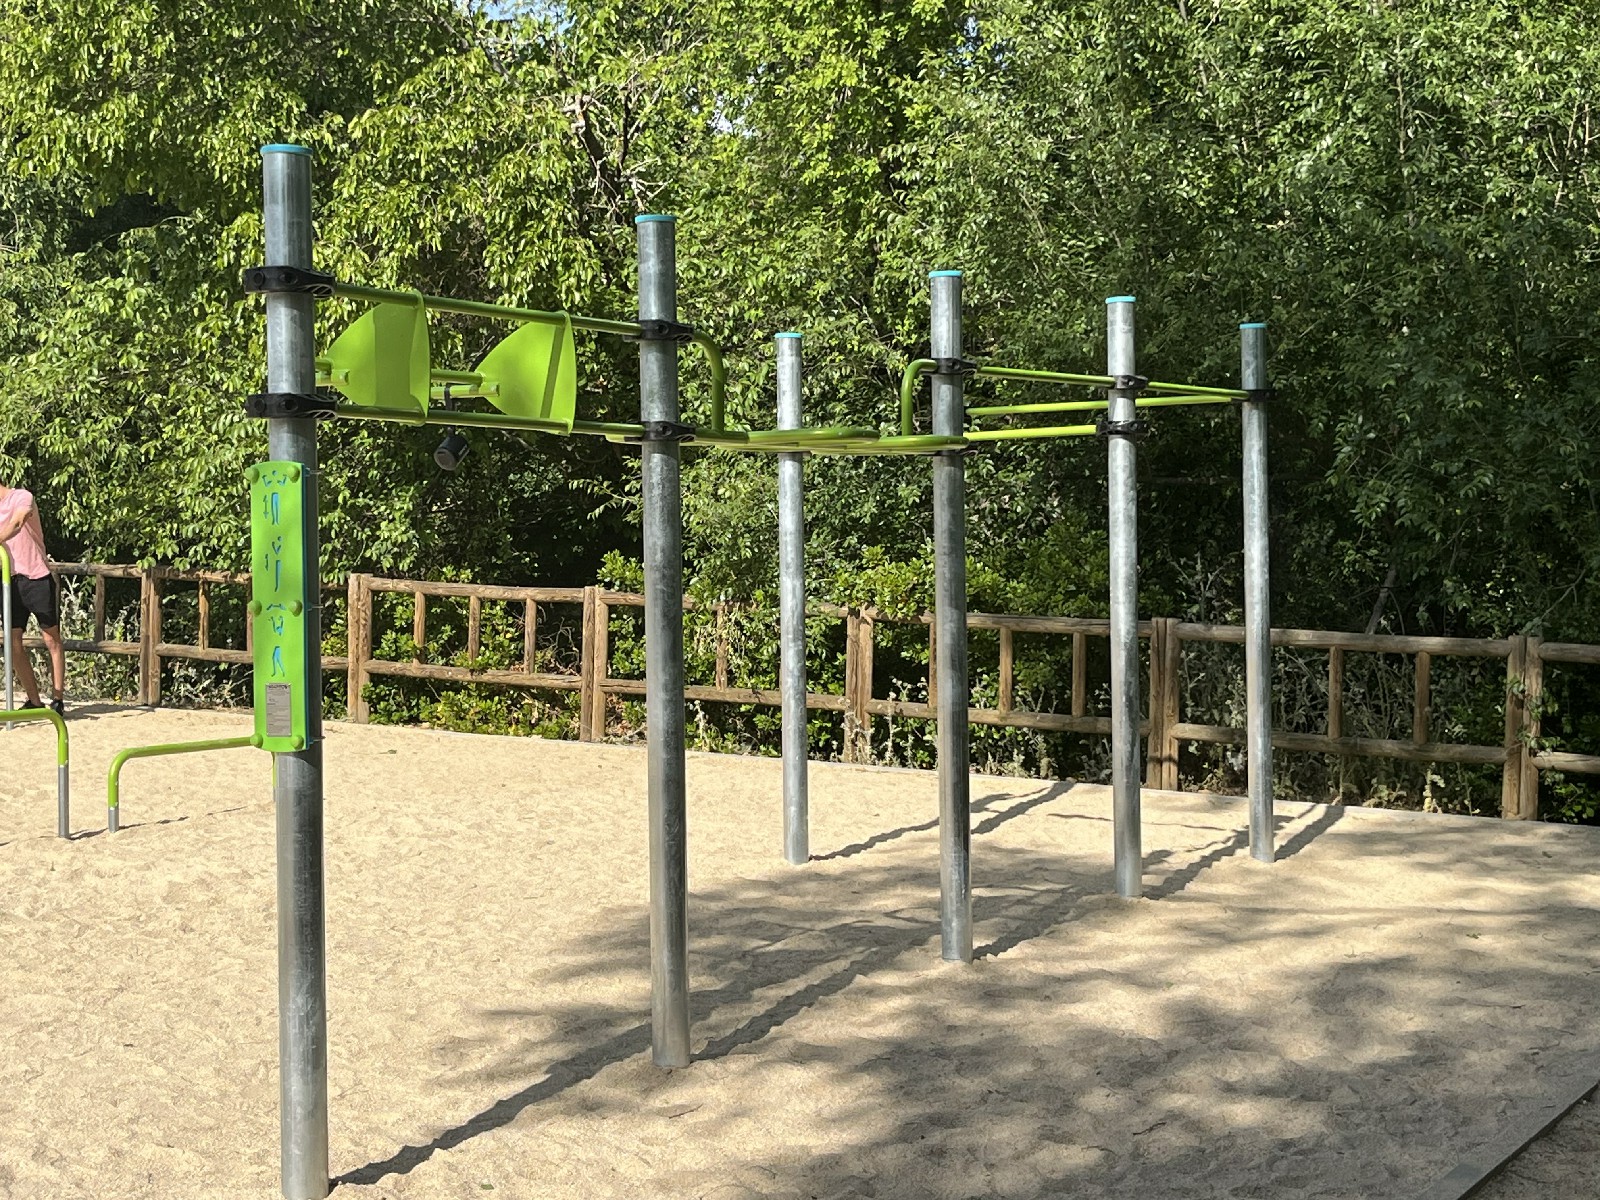 equipamiento street workout homologado para parques publicos